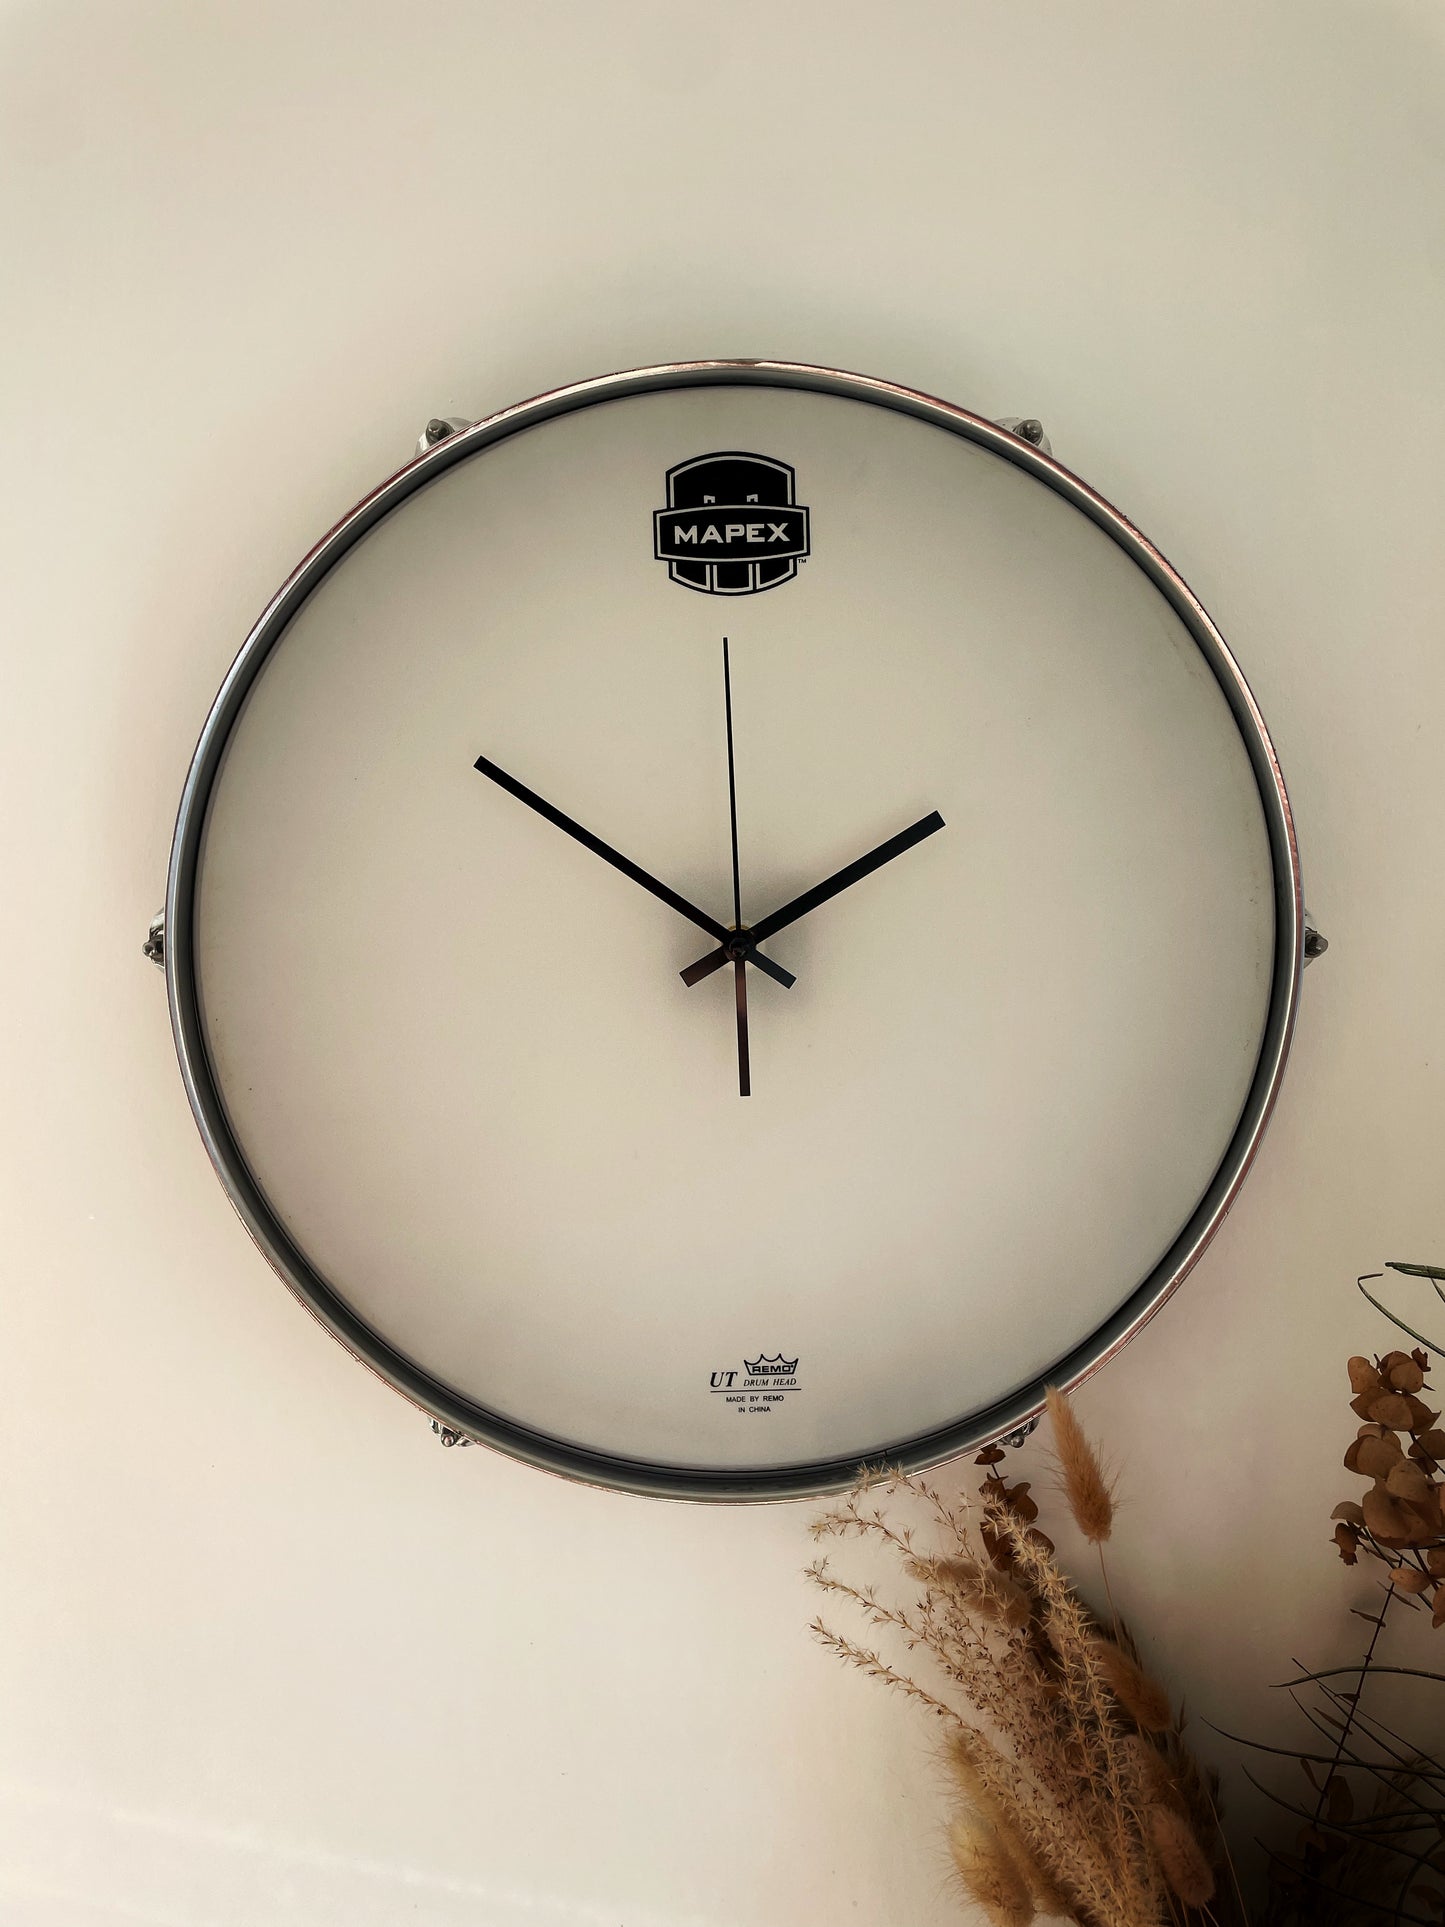 Mapex Drum Clock / Wall Mounted 16” Drum Clock / Black / Upcycled Drum / Drum Kit